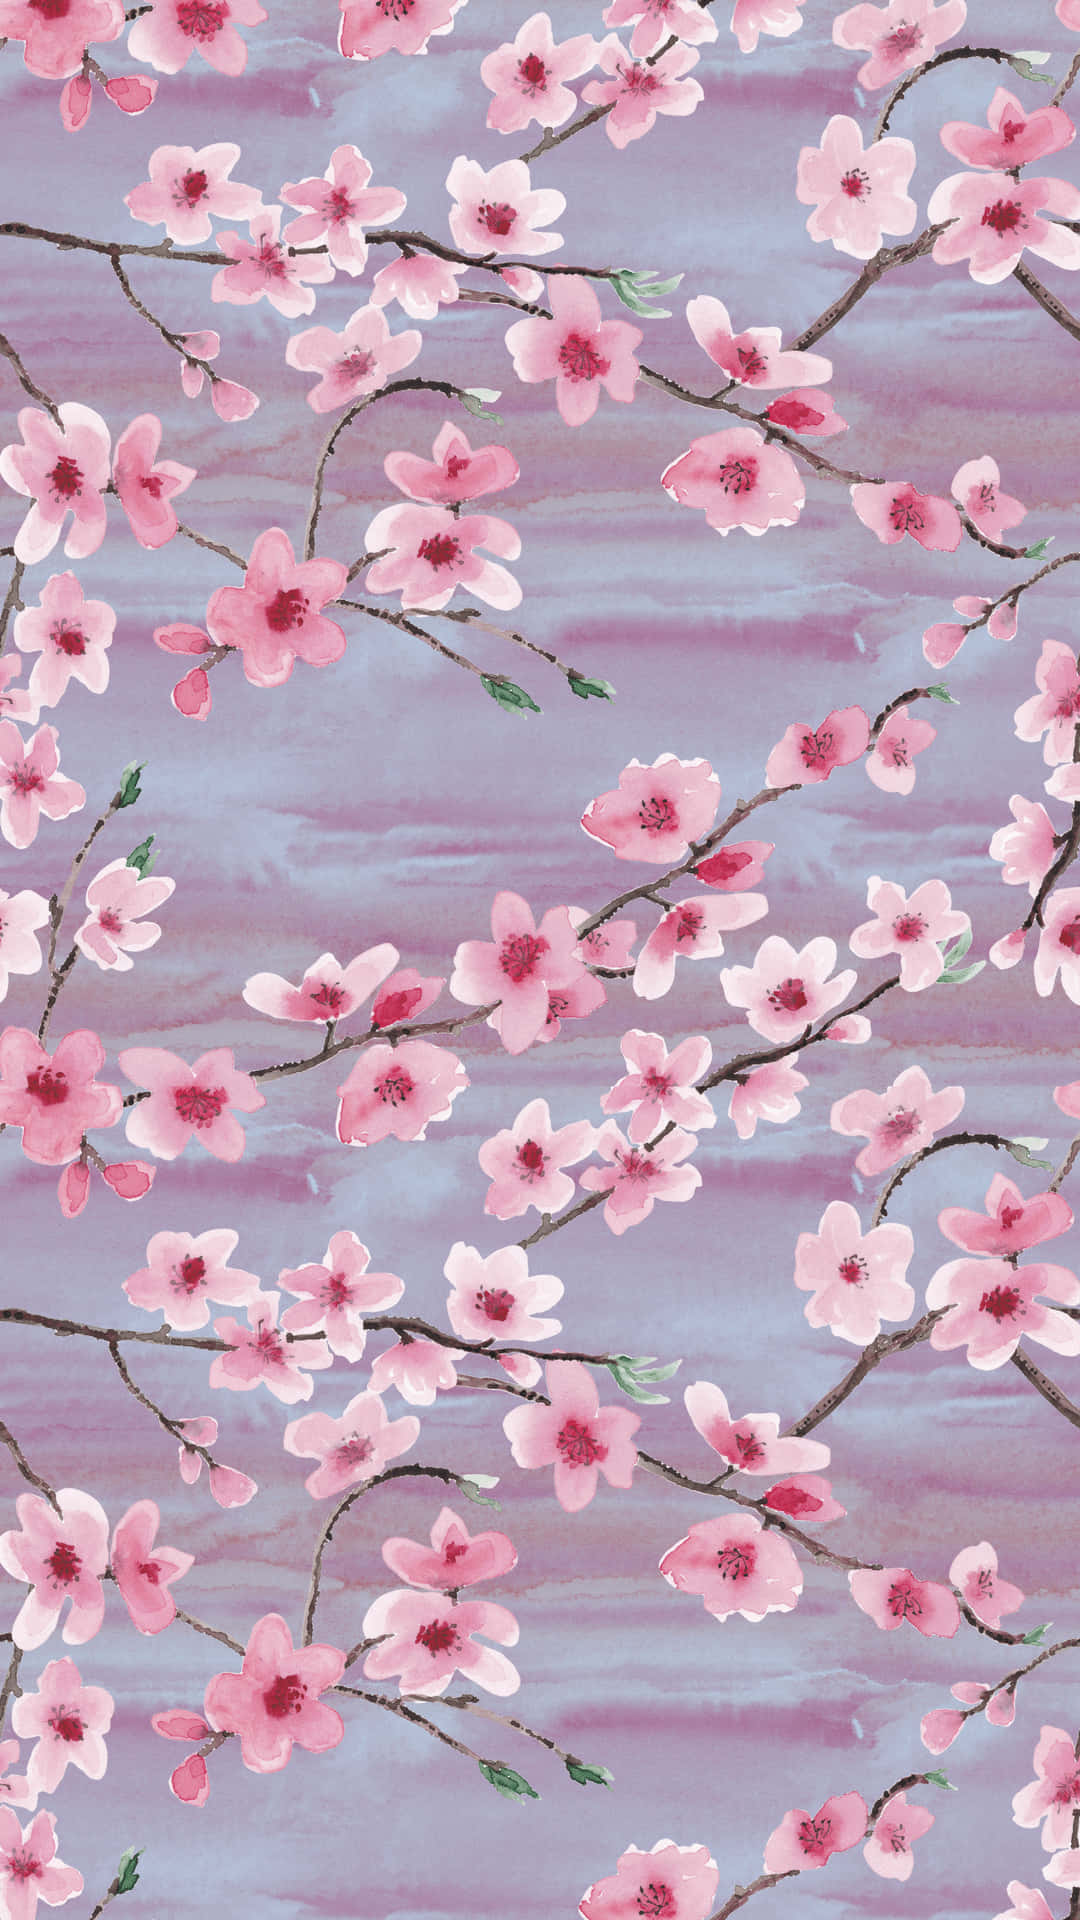 Einezarte Rosa Kirschblüte Voller Romantik. Wallpaper